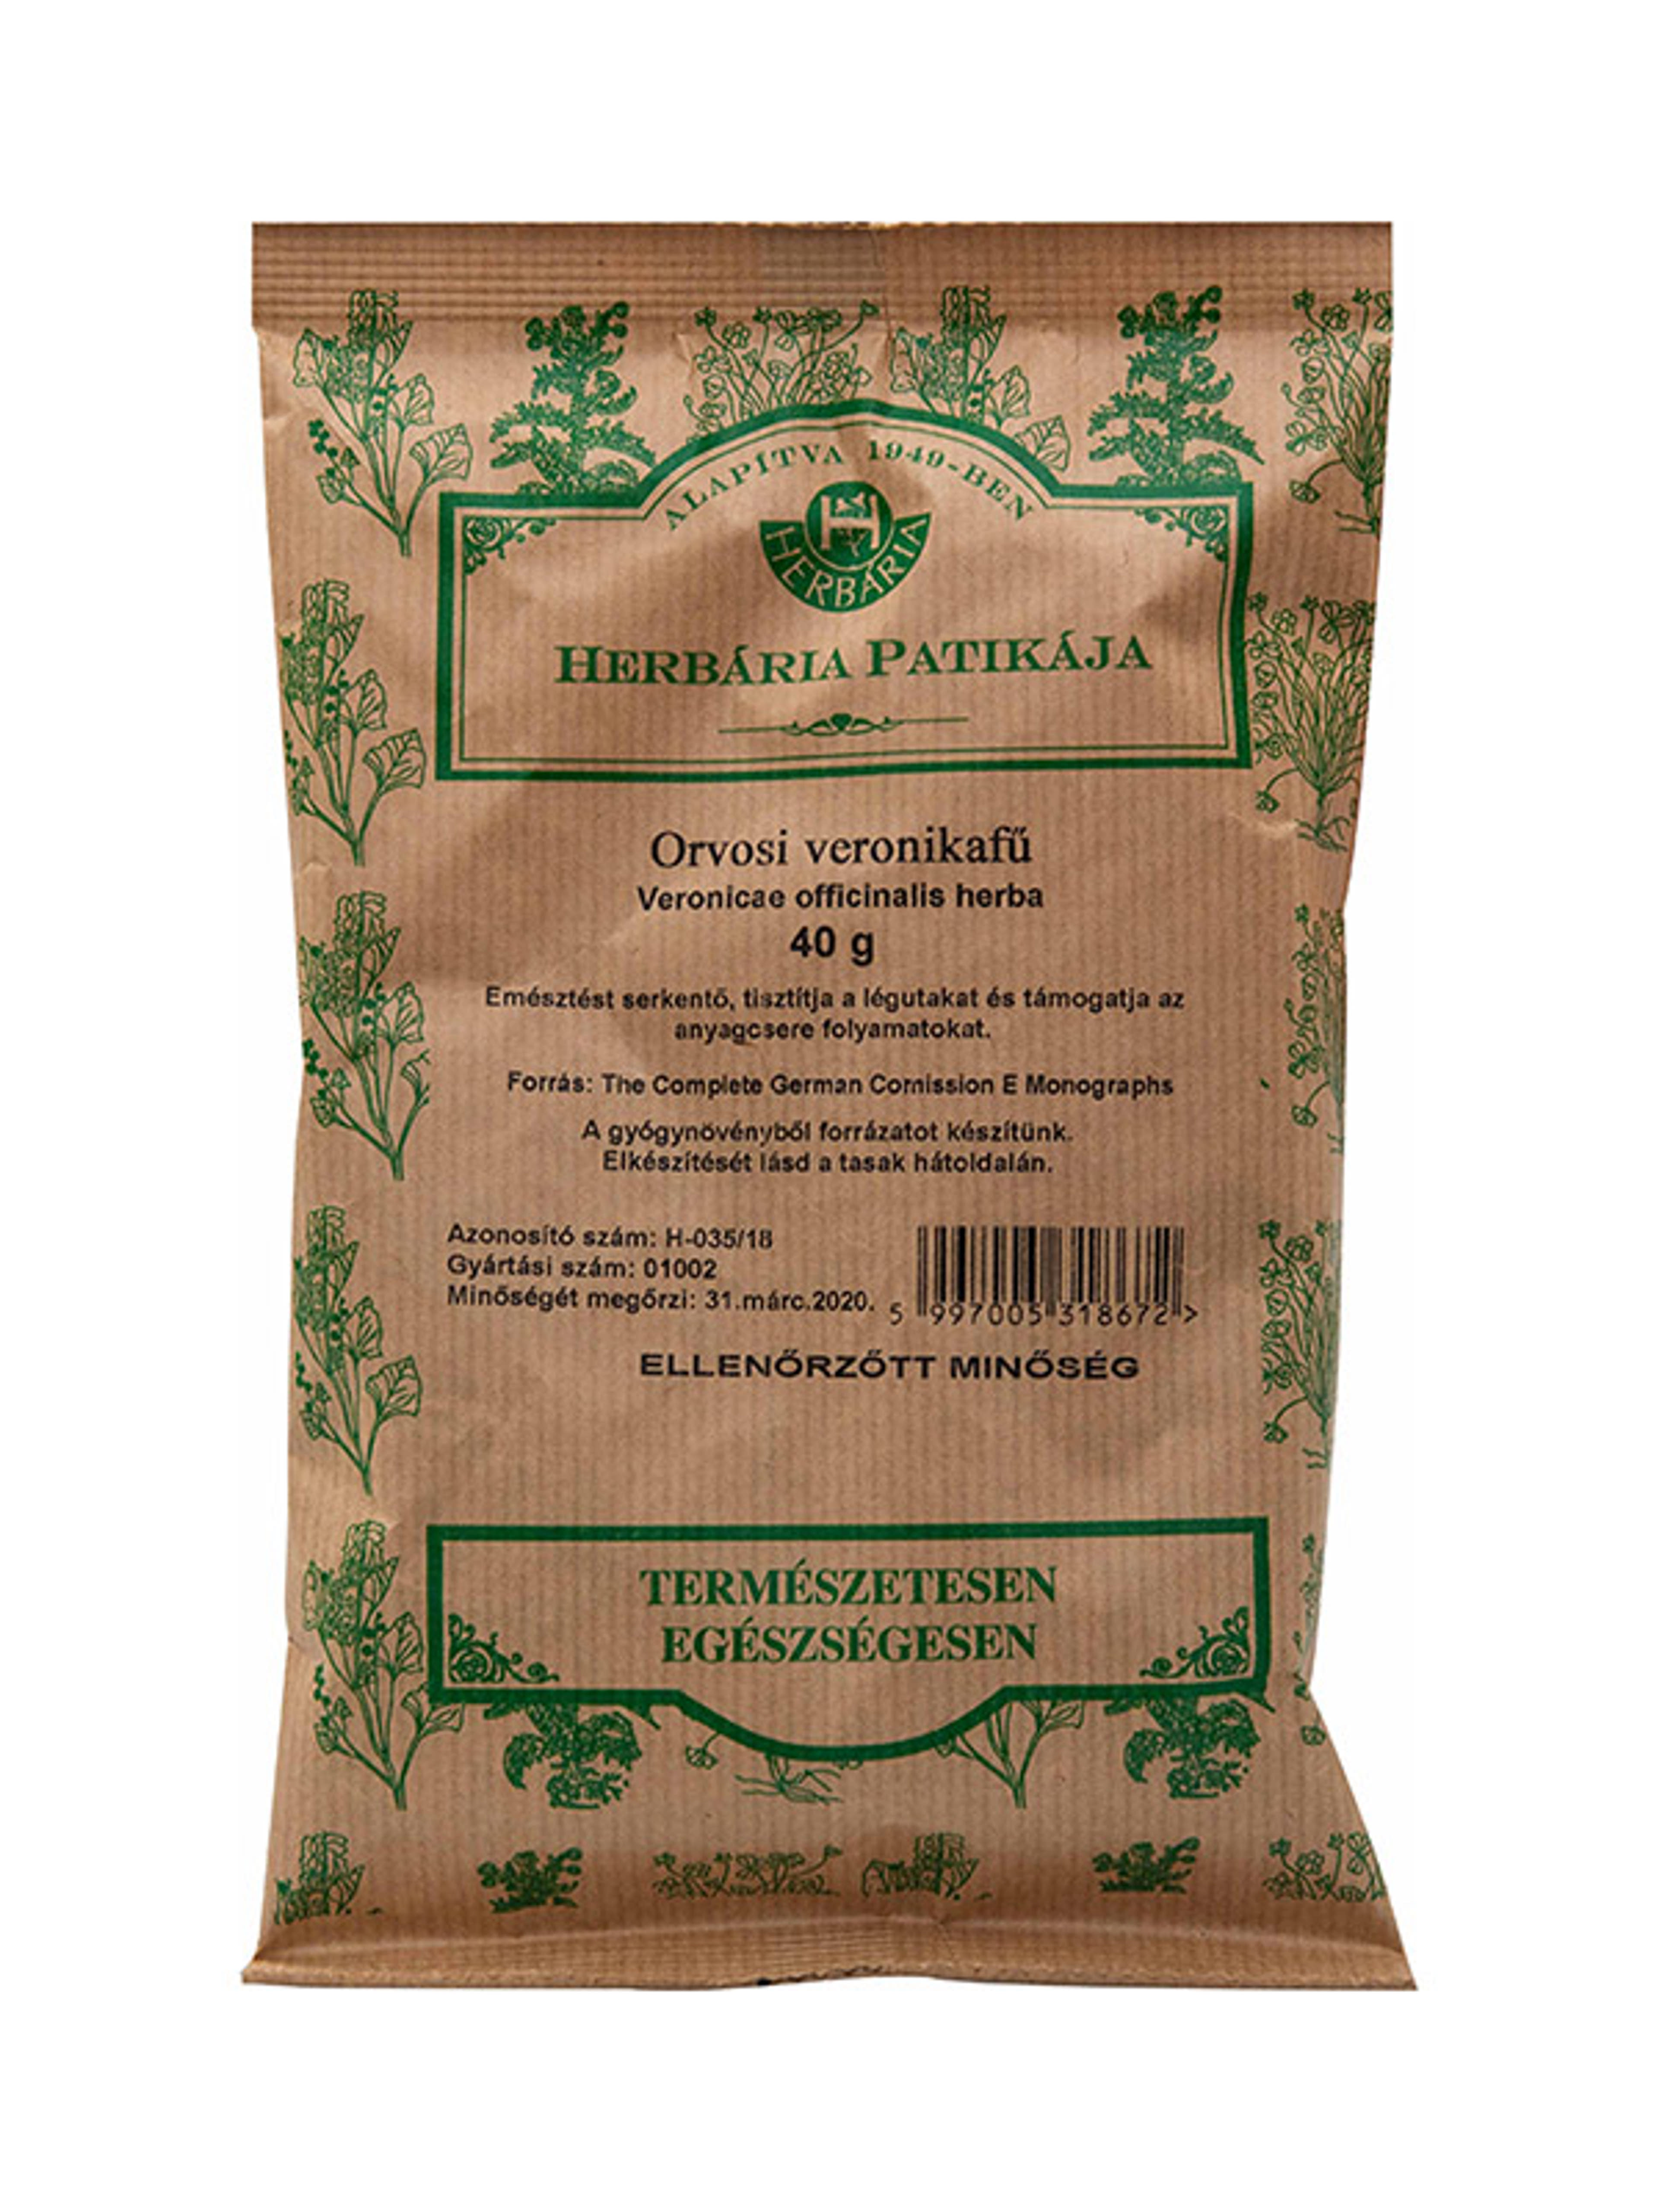 Herbaria orvosi veronikafű - 40 g